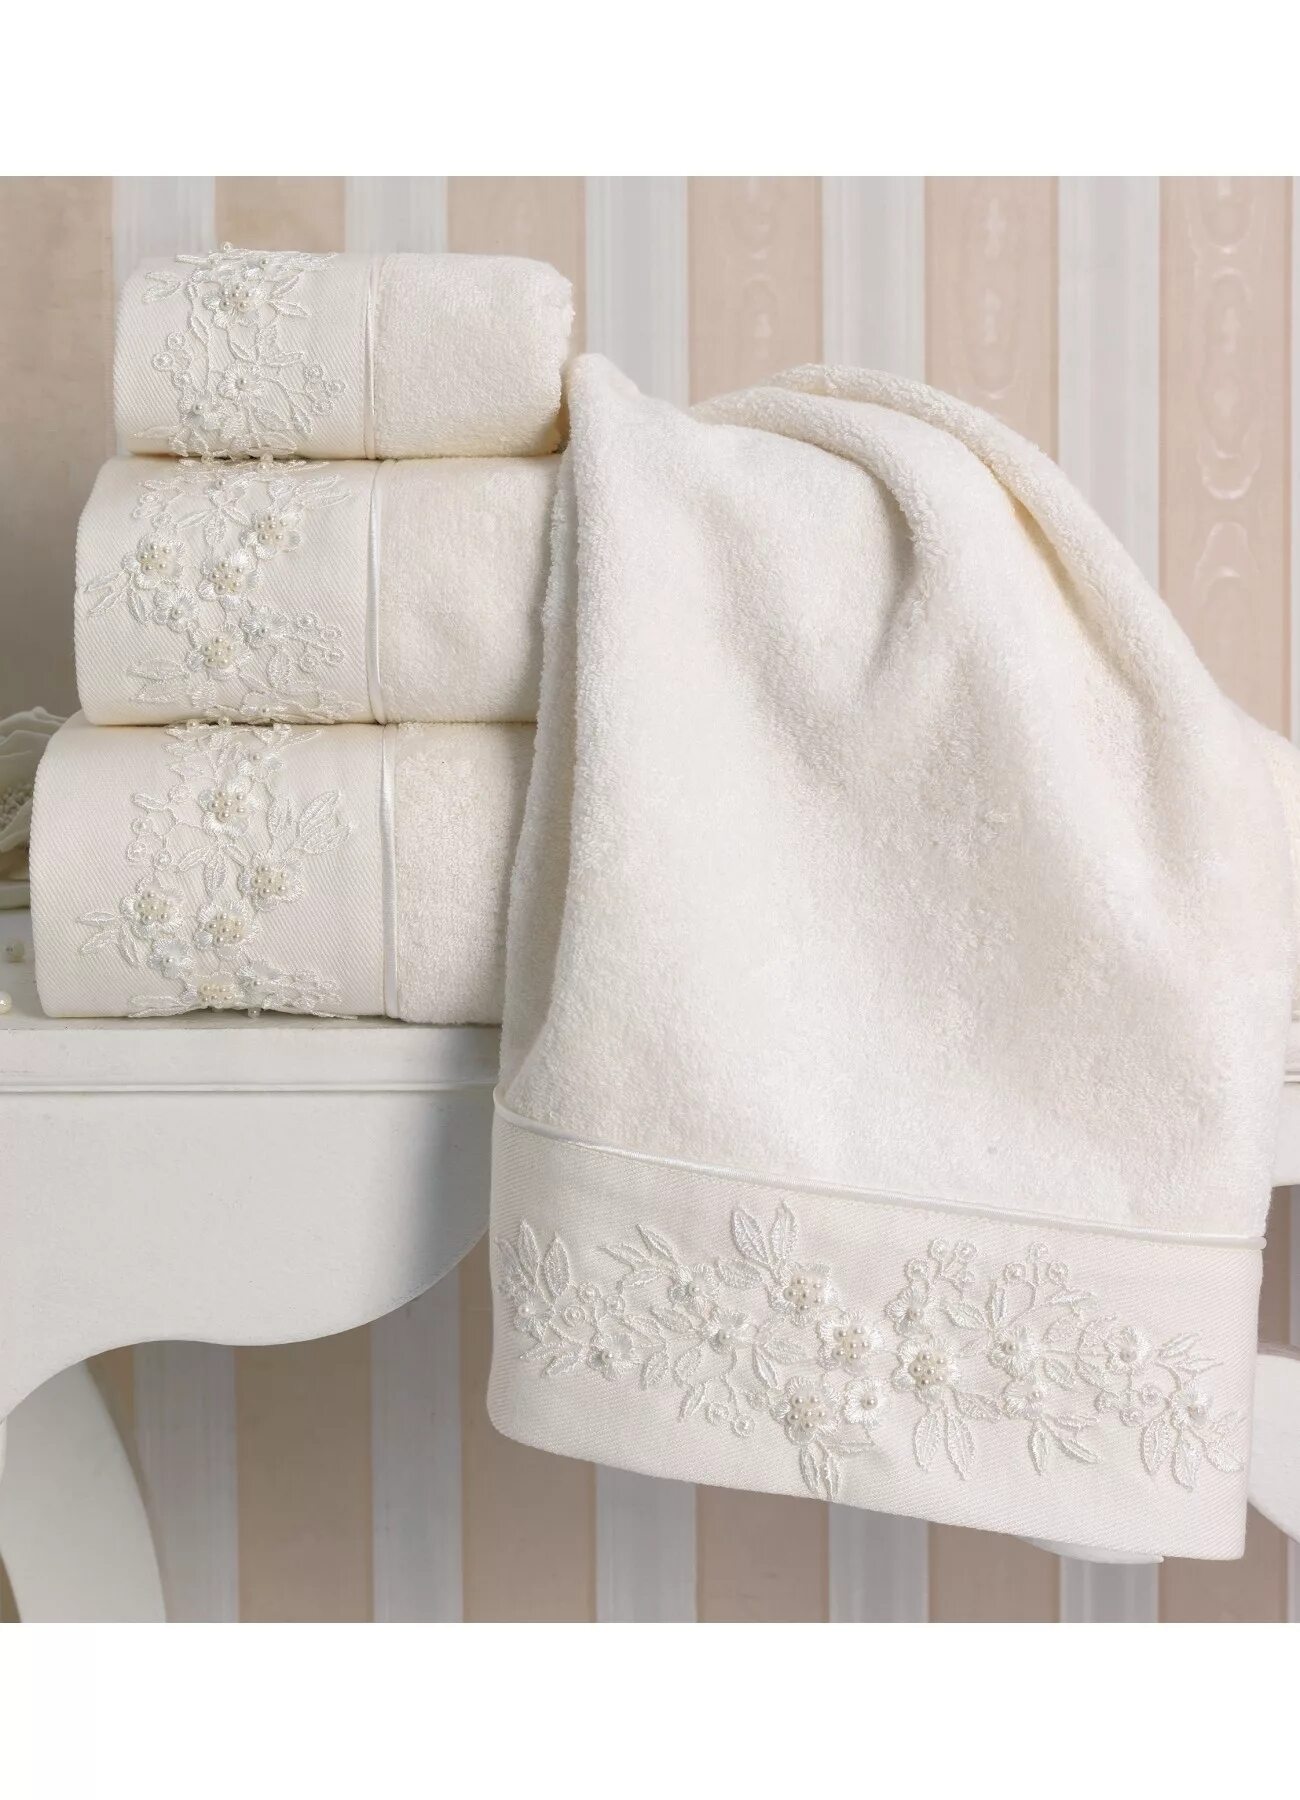 Cotton полотенце. Полотенца софт коттон. Soft Cotton Juliet. Софт коттон полотенца белое. Soft Cotton 1801 белый.